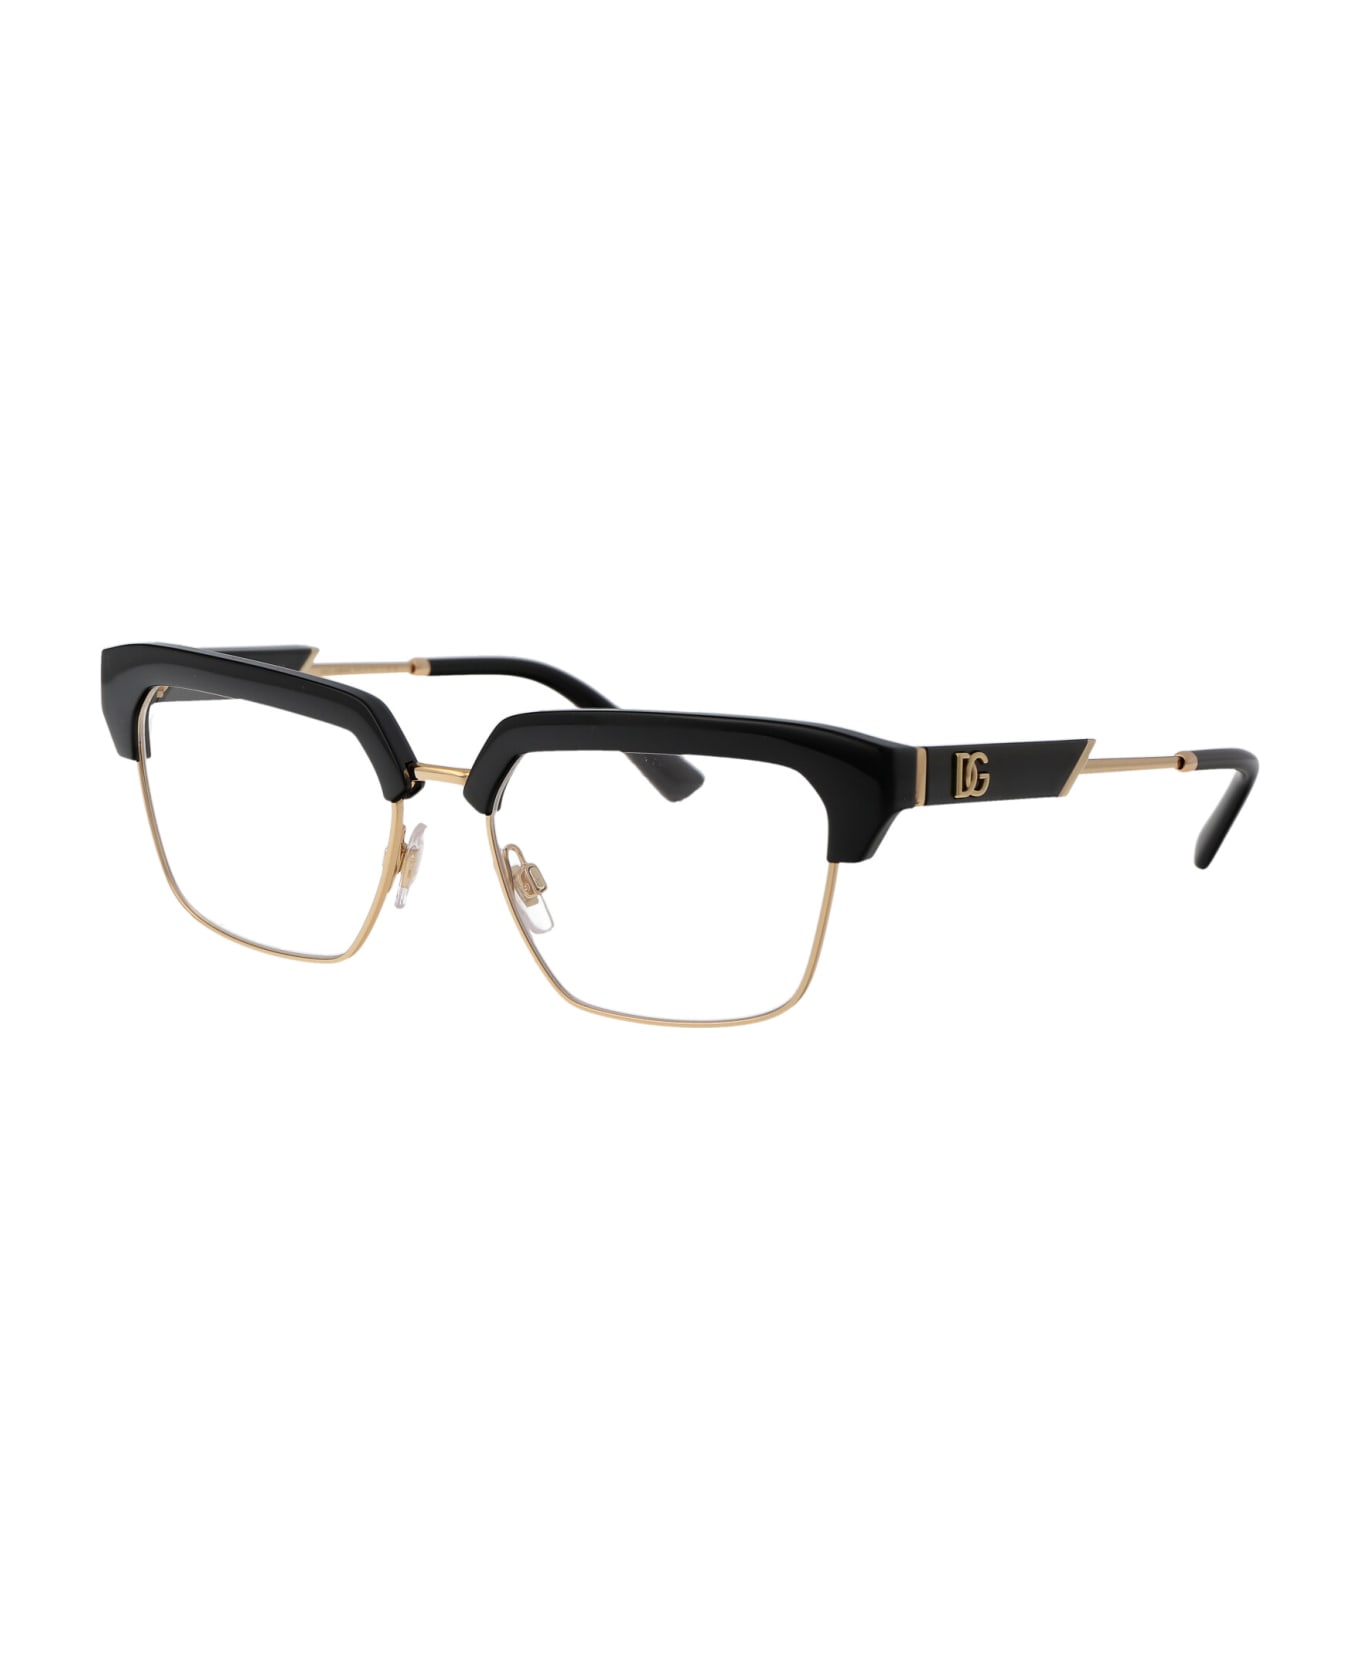 Dolce & Gabbana Eyewear 0dg5103 Glasses - 501 BLACK